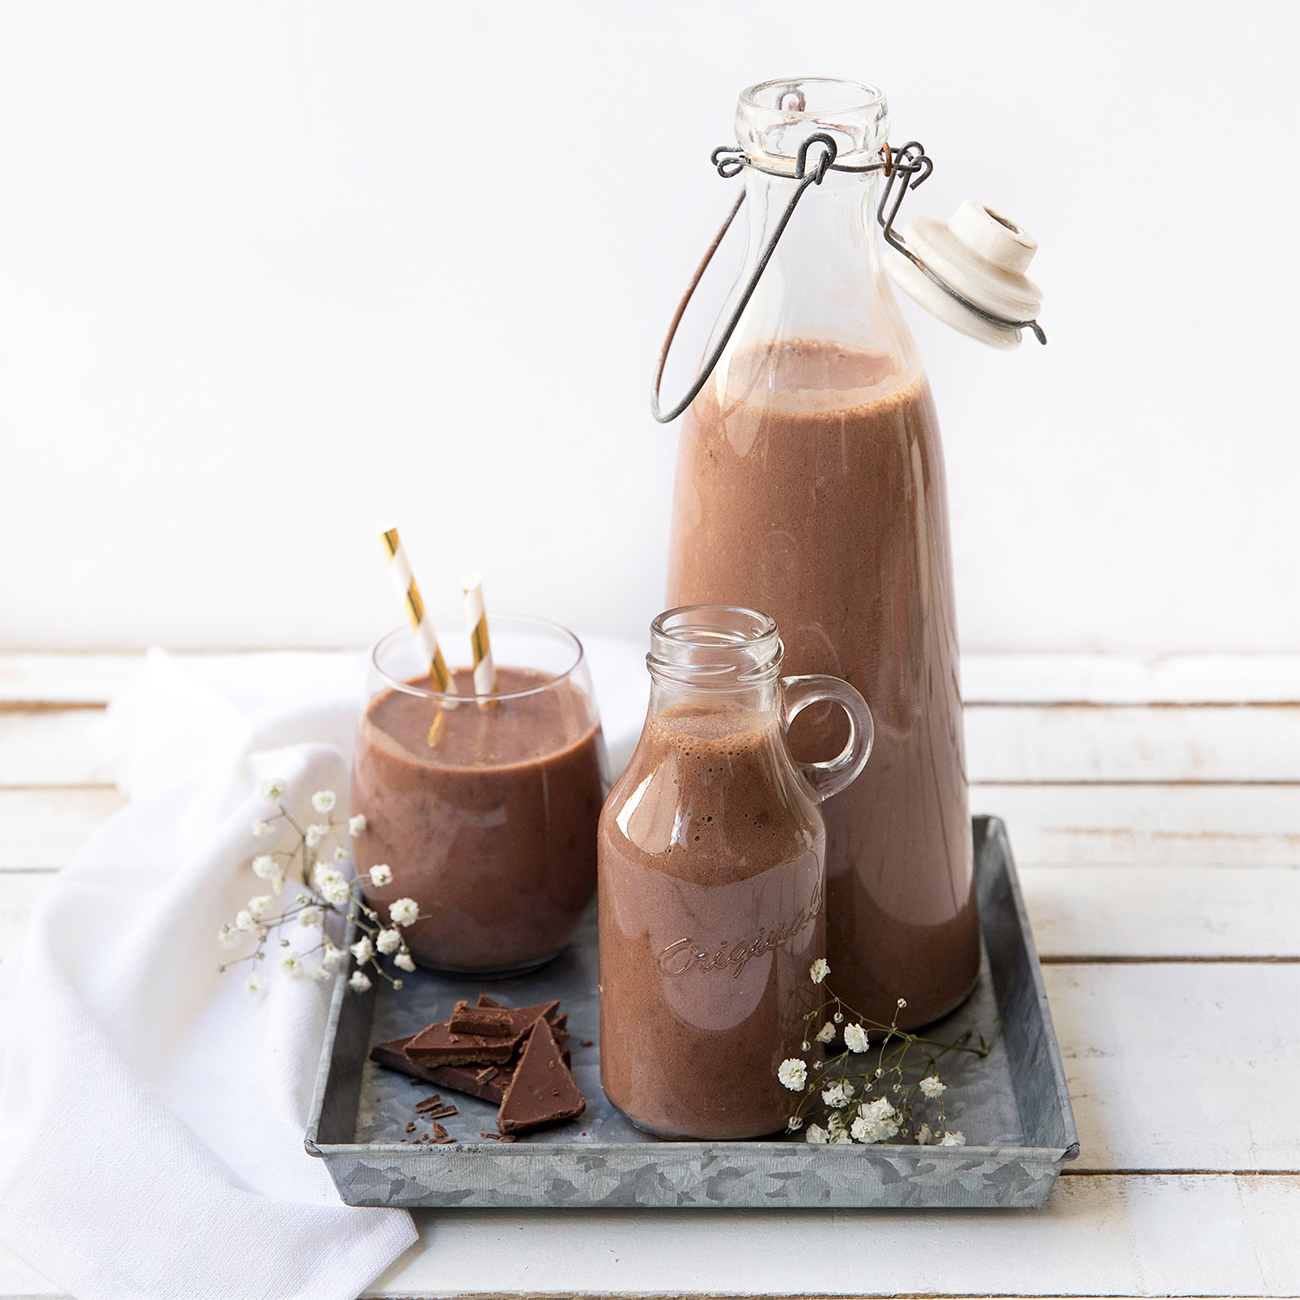 formula 1 Herbalife Nutrition gusto cioccolato shake in un bicchiere e brocche su un vassoio grigio